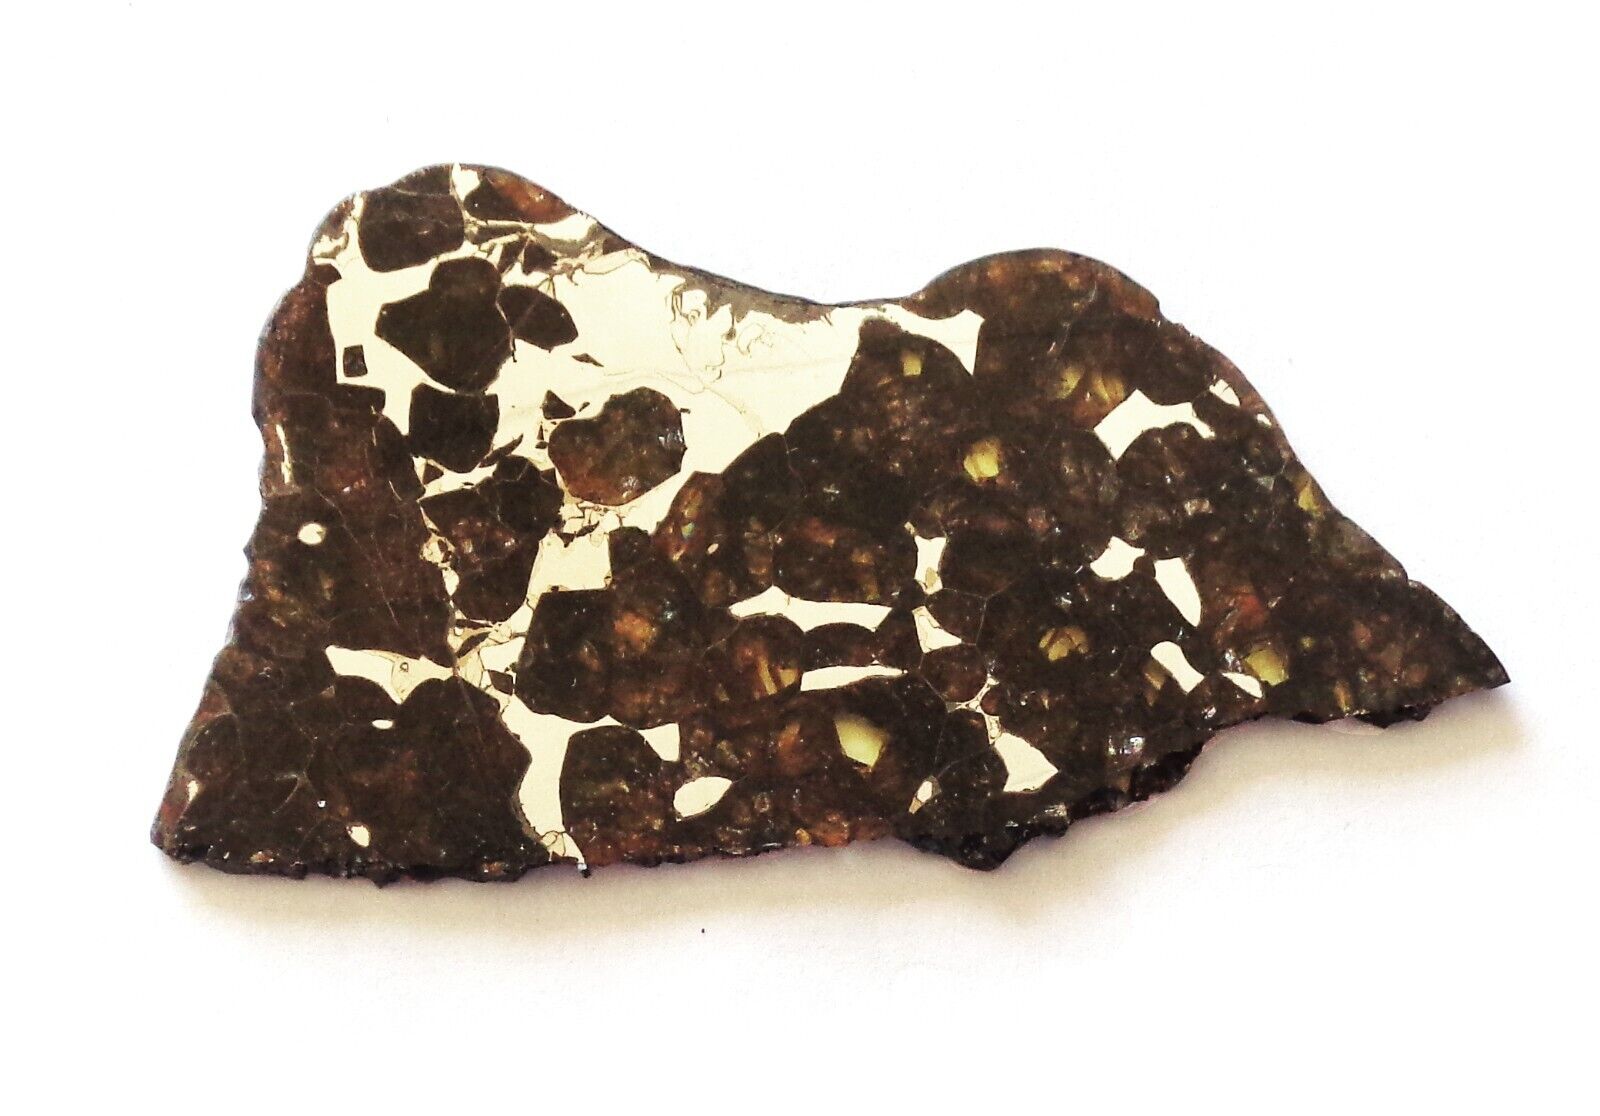 Meteorite Seymchan nice thin slice 25.0 grams, good transparent